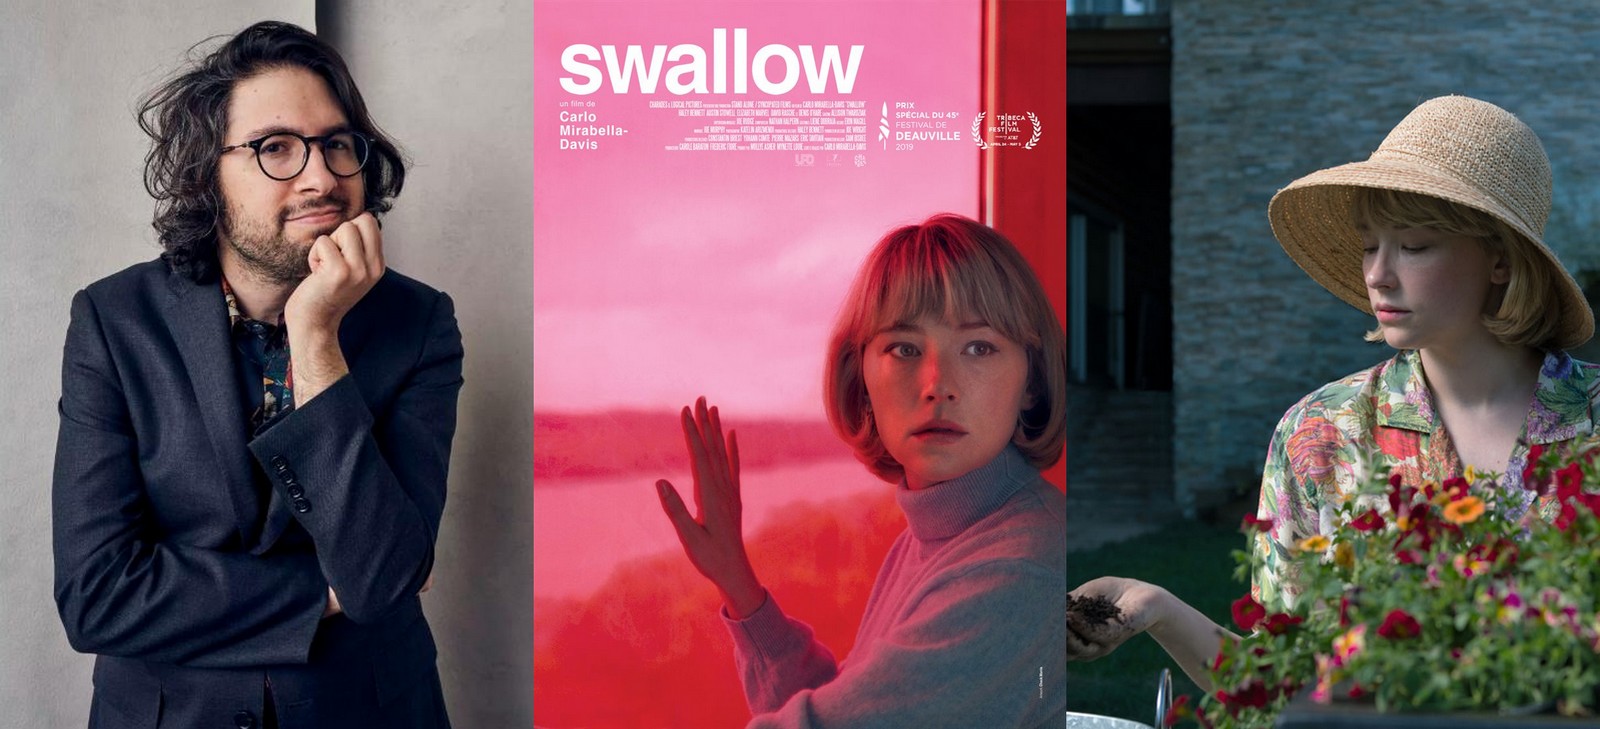 Carlo Mirabella-Davis, réalisateur de Swallow (2019), avec Haley Bennett